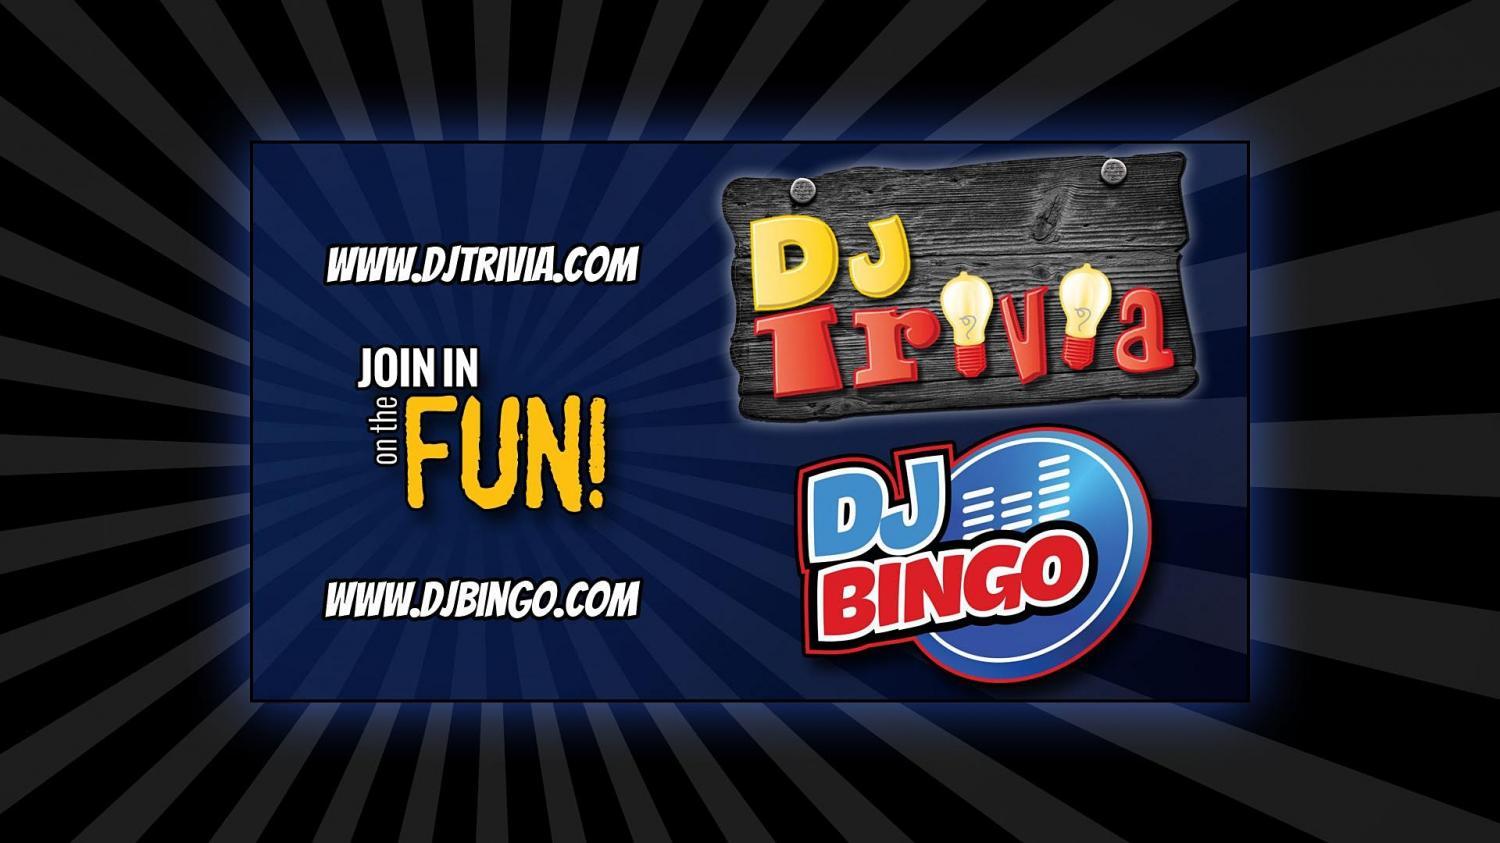 Play DJ Trivia FREE in Ocala - Downtown Billiards
Tue Dec 13, 7:00 PM - Tue Dec 13, 8:30 PM
in 39 days